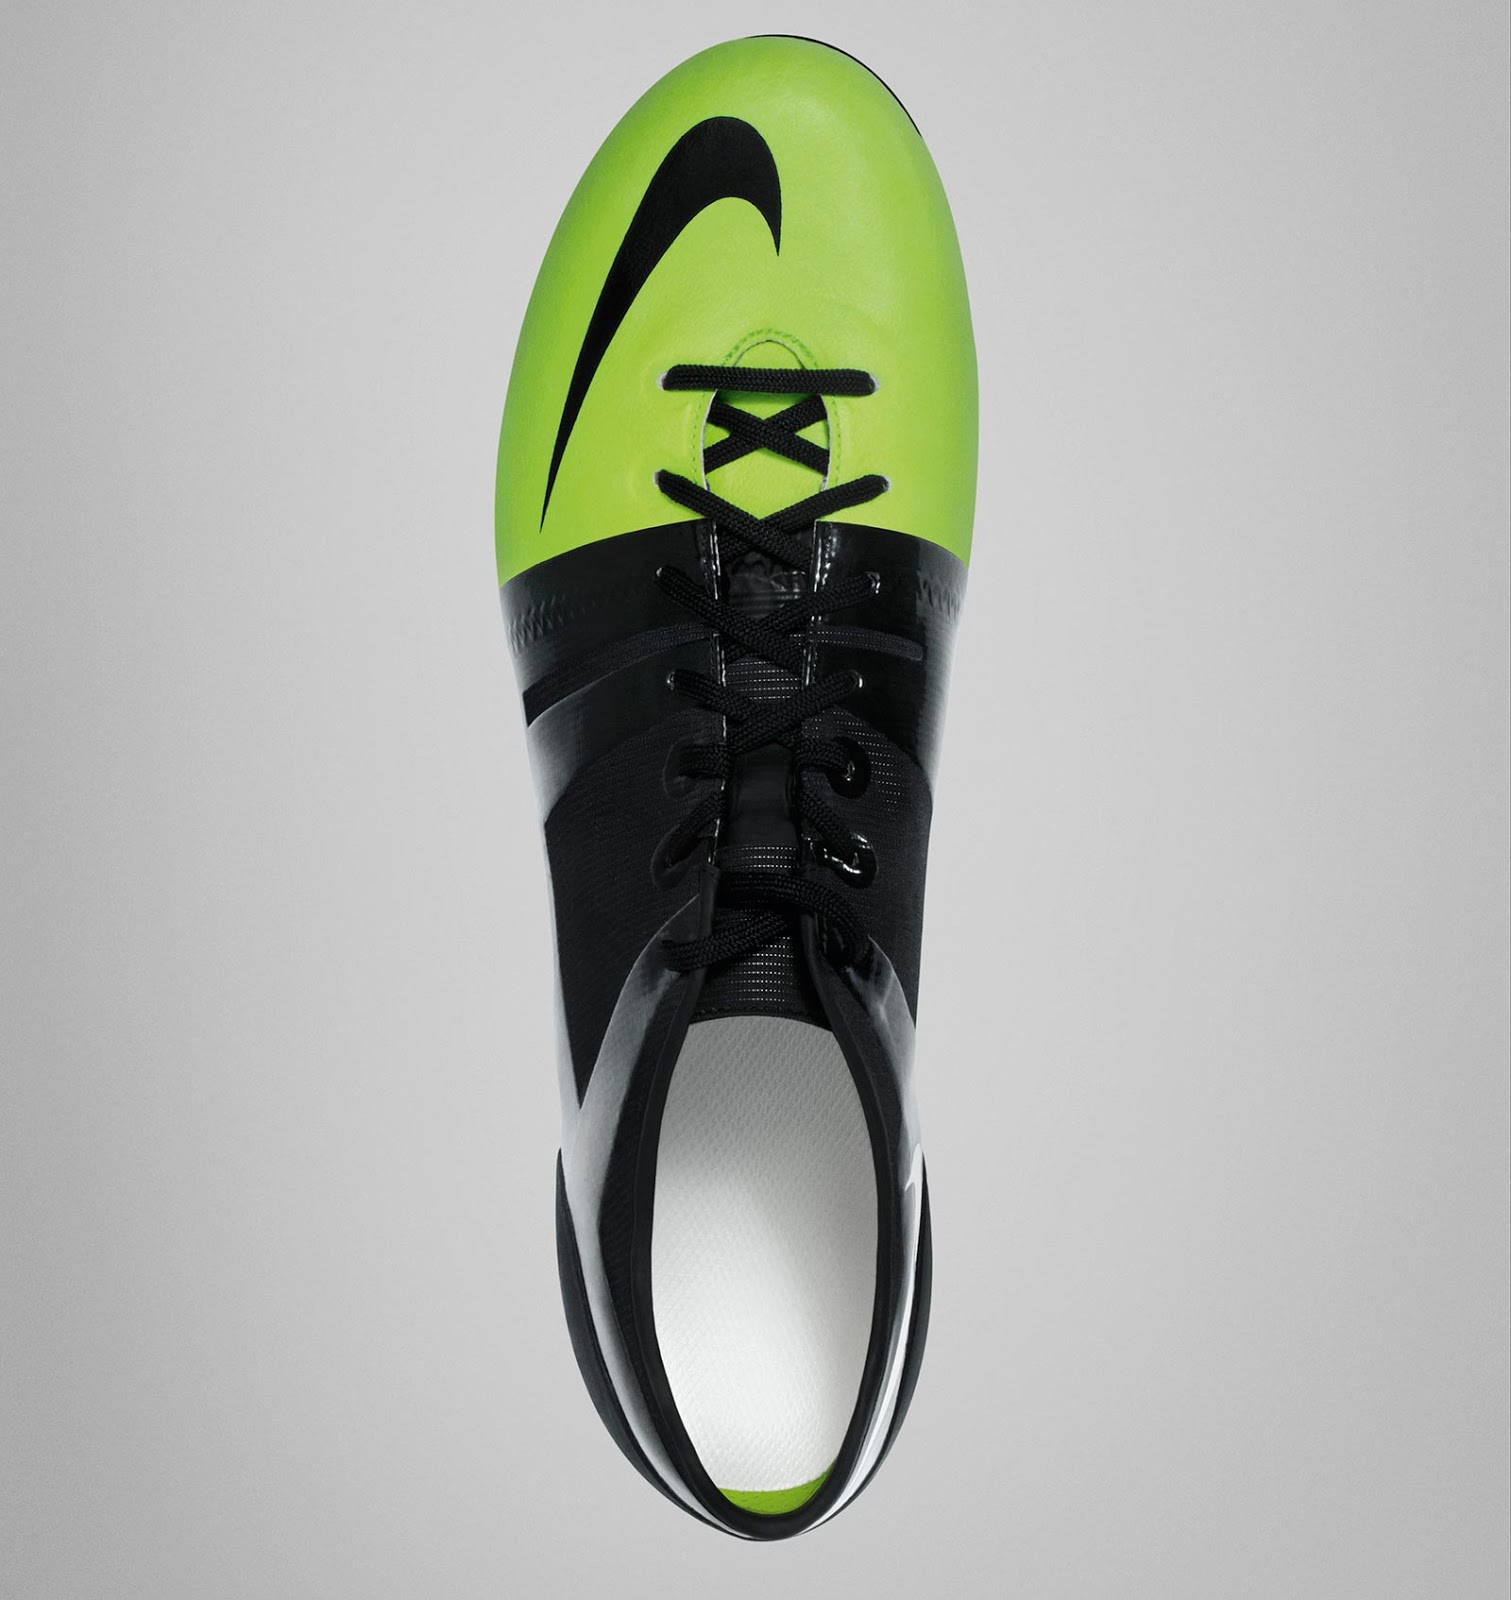 Pebish Negociar imitar Original Nike GS 2012 Football Boots - In Detail - Footy Headlines